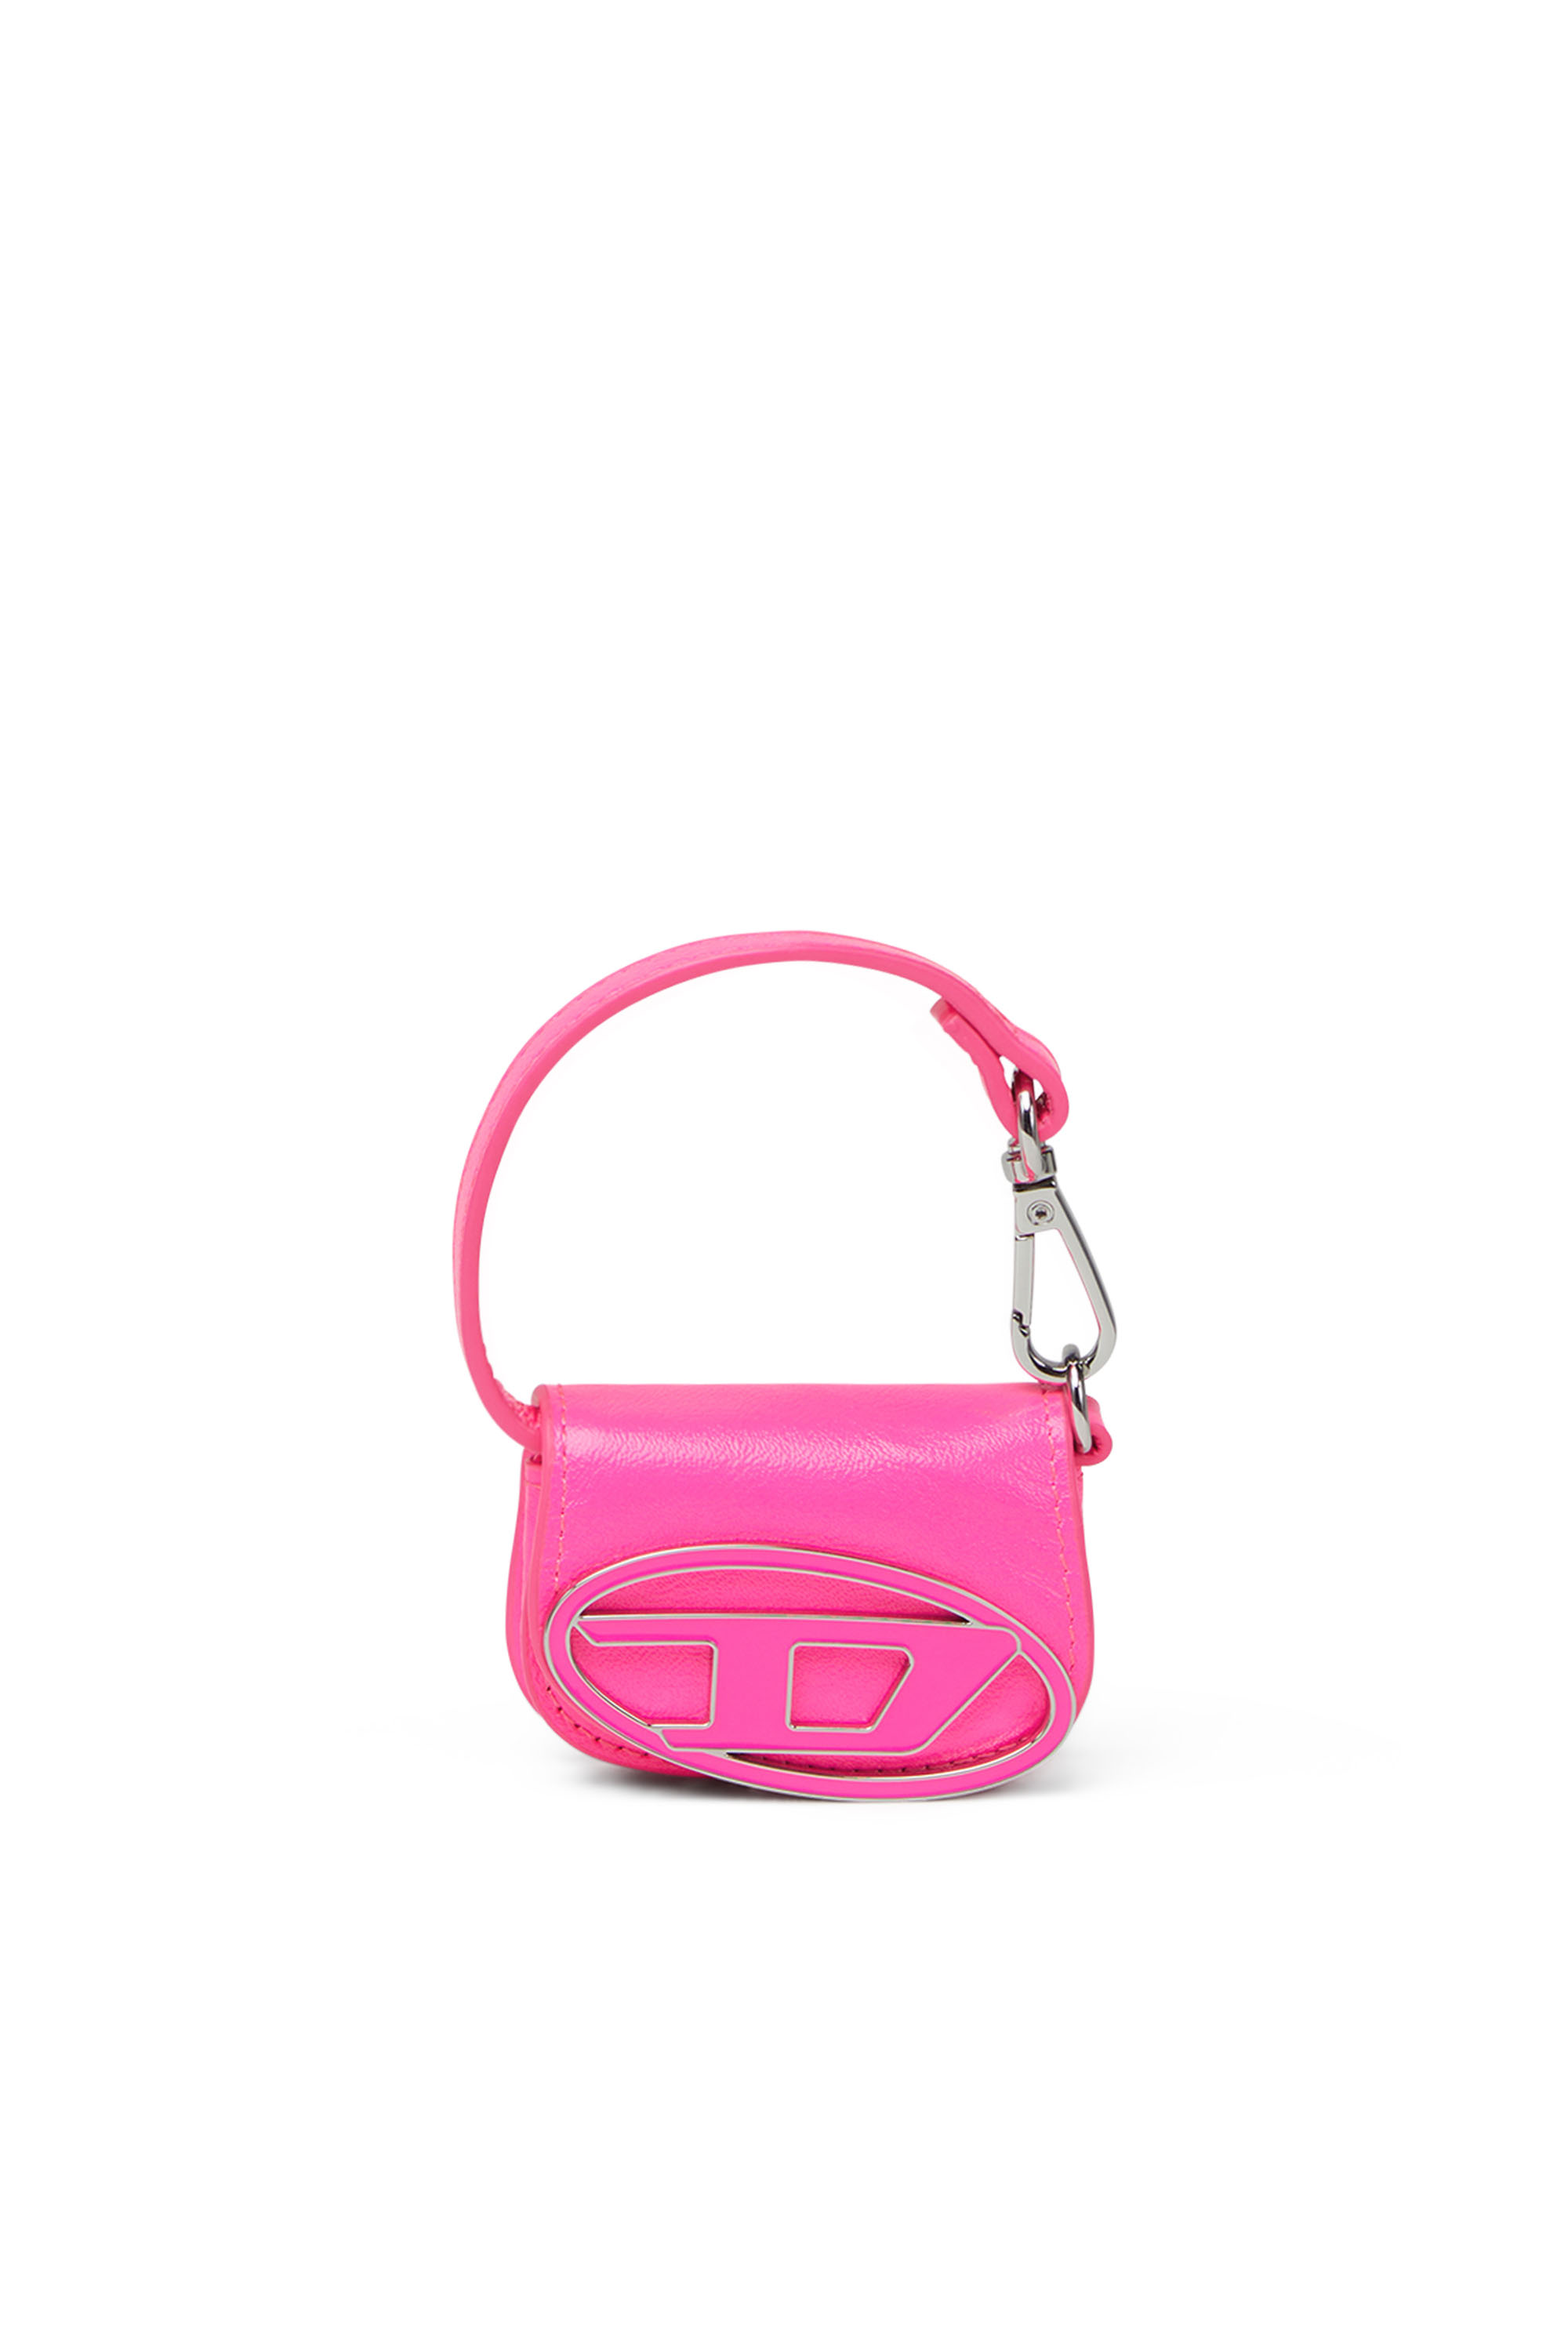 Women's Accessories: Bags, Wallets, Fragrances | Diesel®